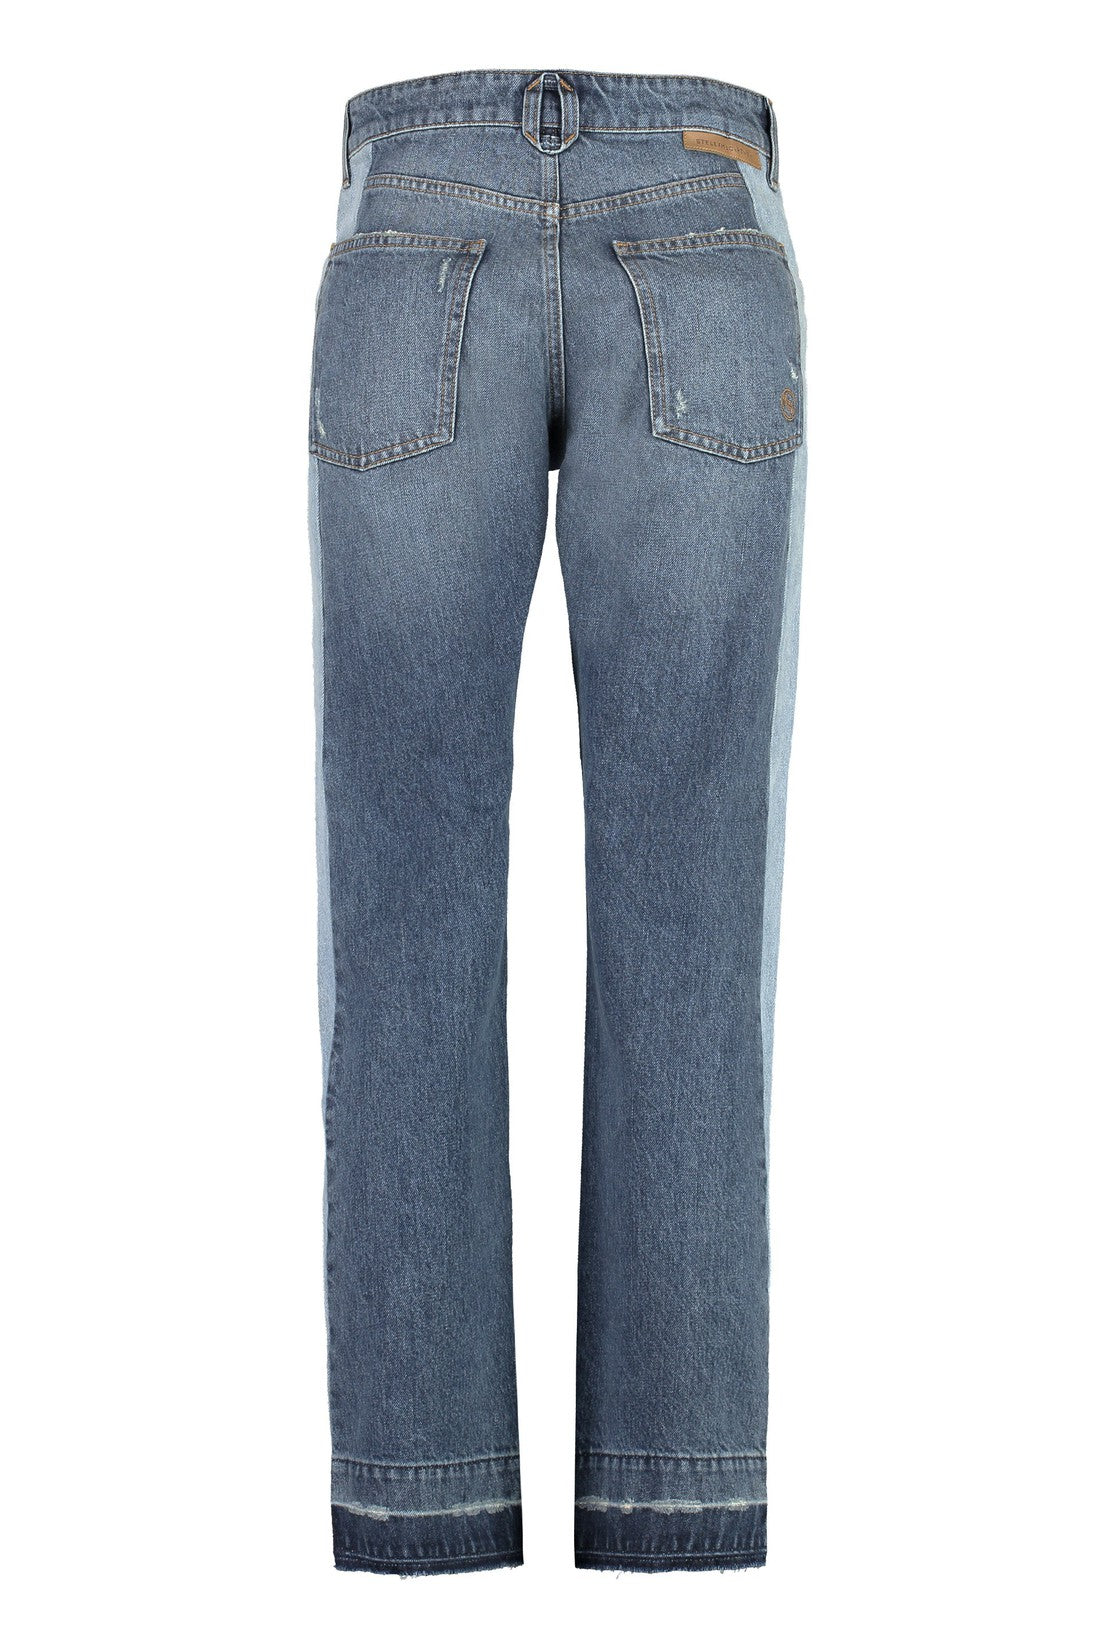 Stella McCartney-OUTLET-SALE-5-pocket straight-leg jeans-ARCHIVIST